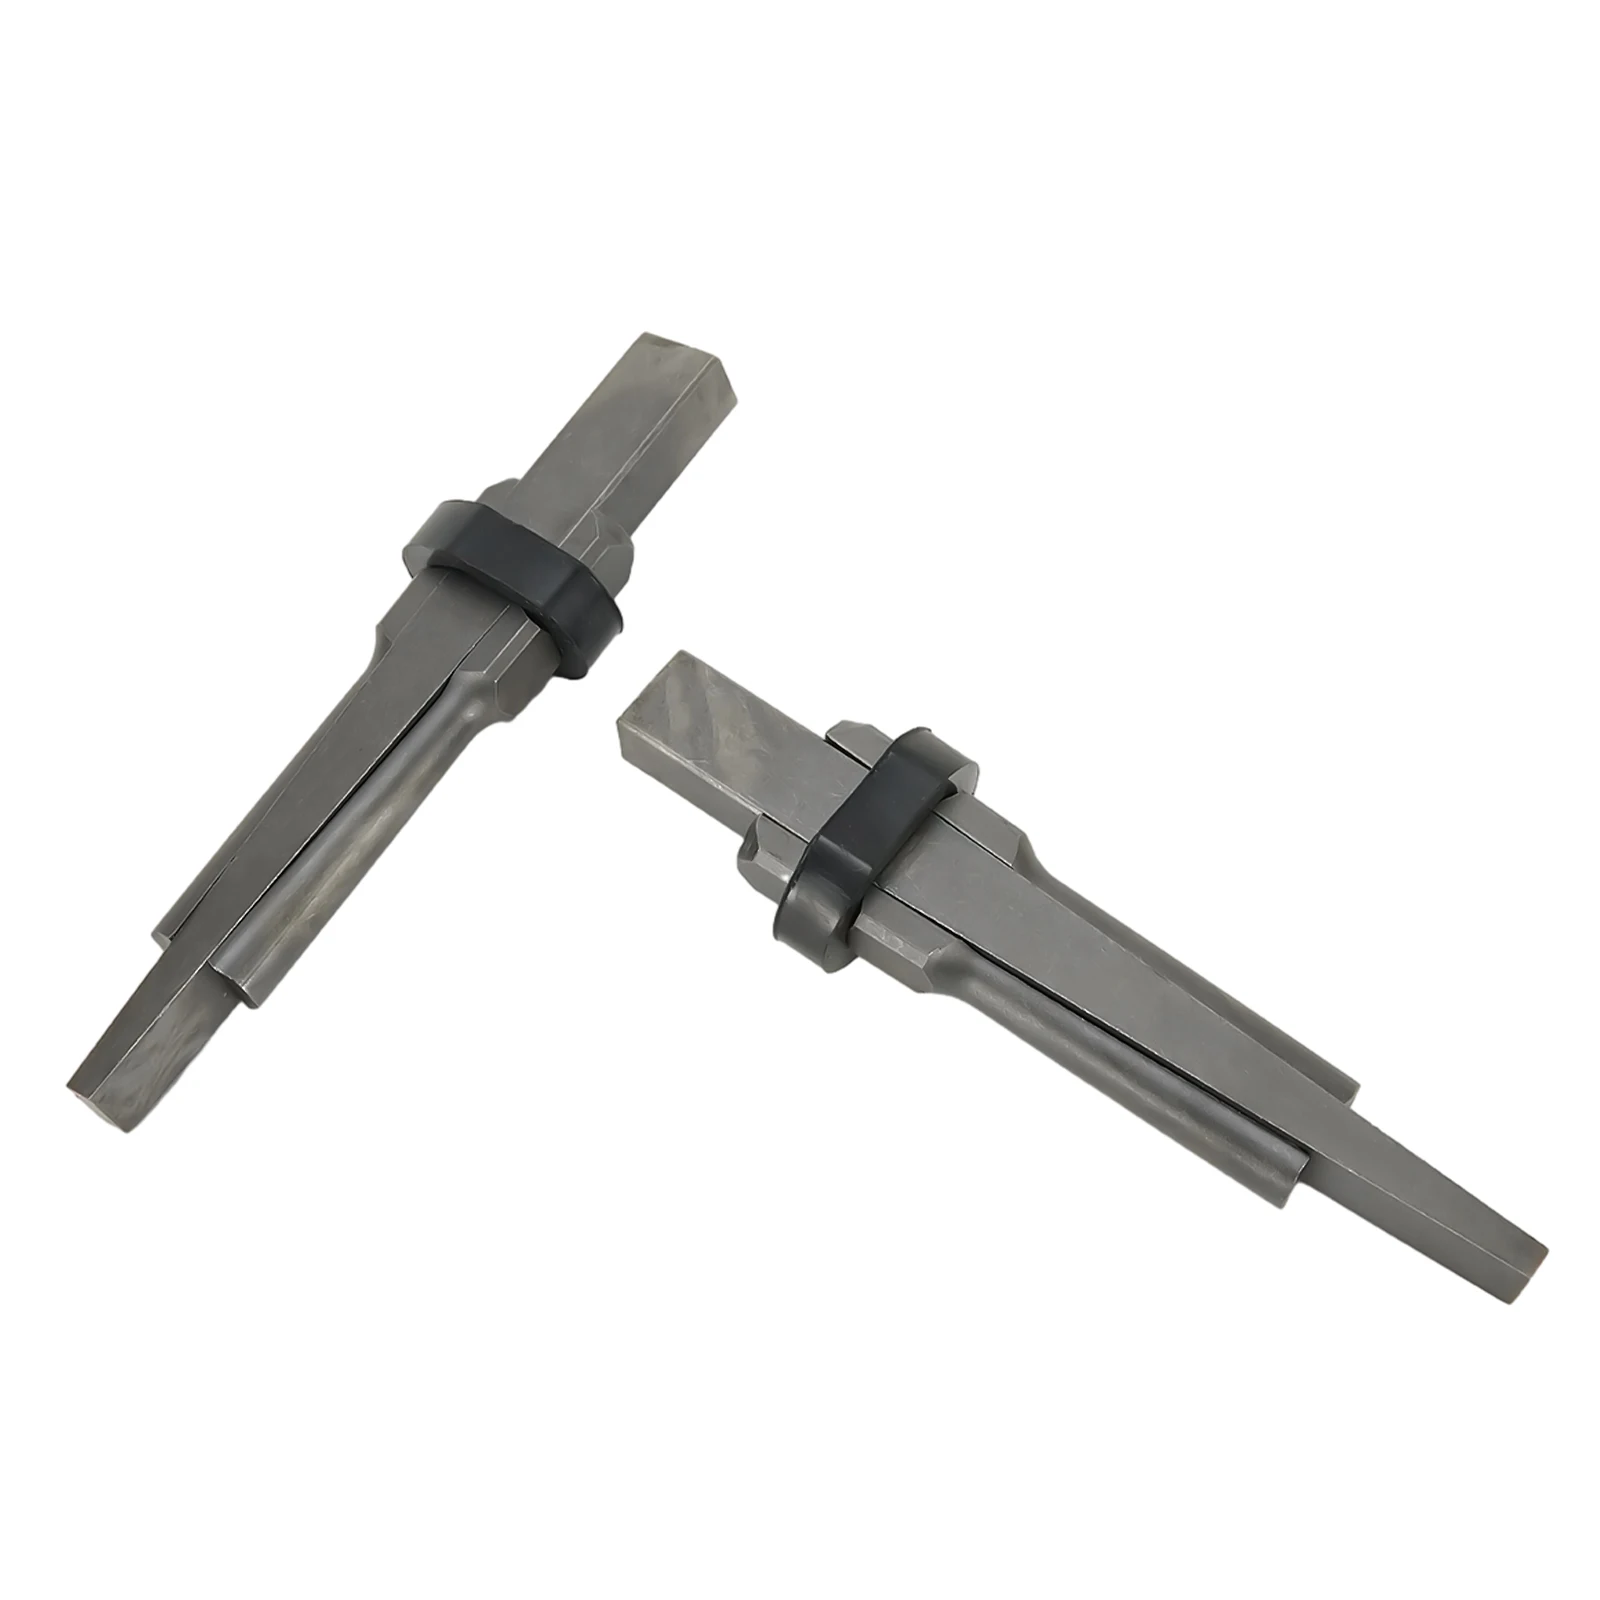 

2set 23mm Metal Plug Wedges Concrete Rock Stone Splitter For Hammer Split Off Rock Granite Marble Tools Accessories